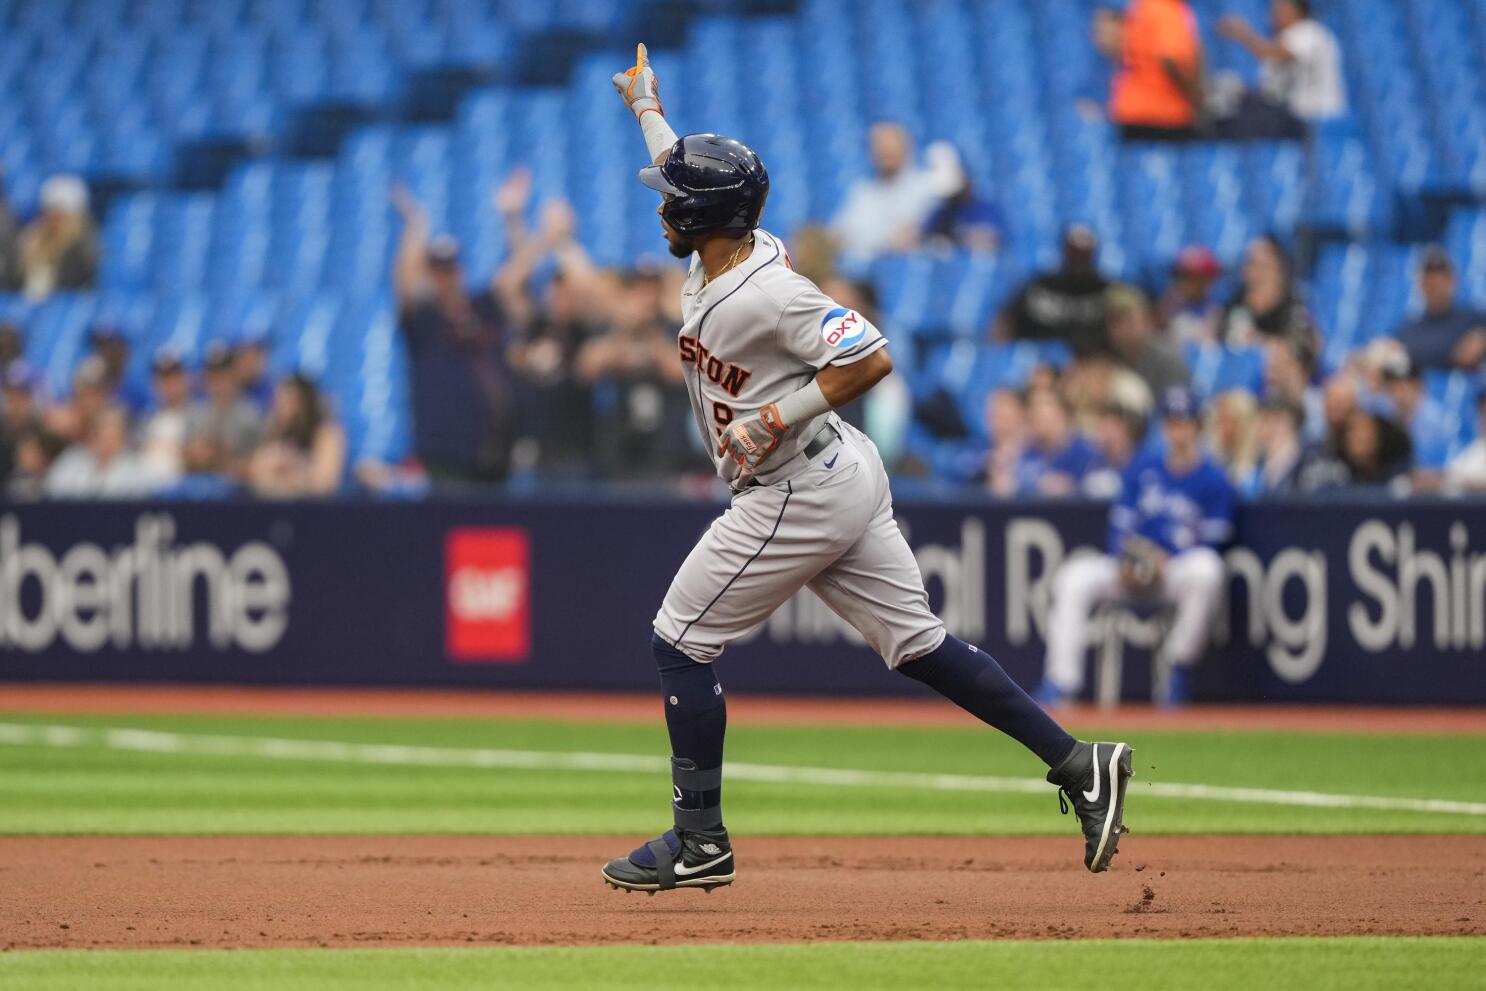 Around baseball, Bautista's bat flip gets stamp of approval - The Boston  Globe